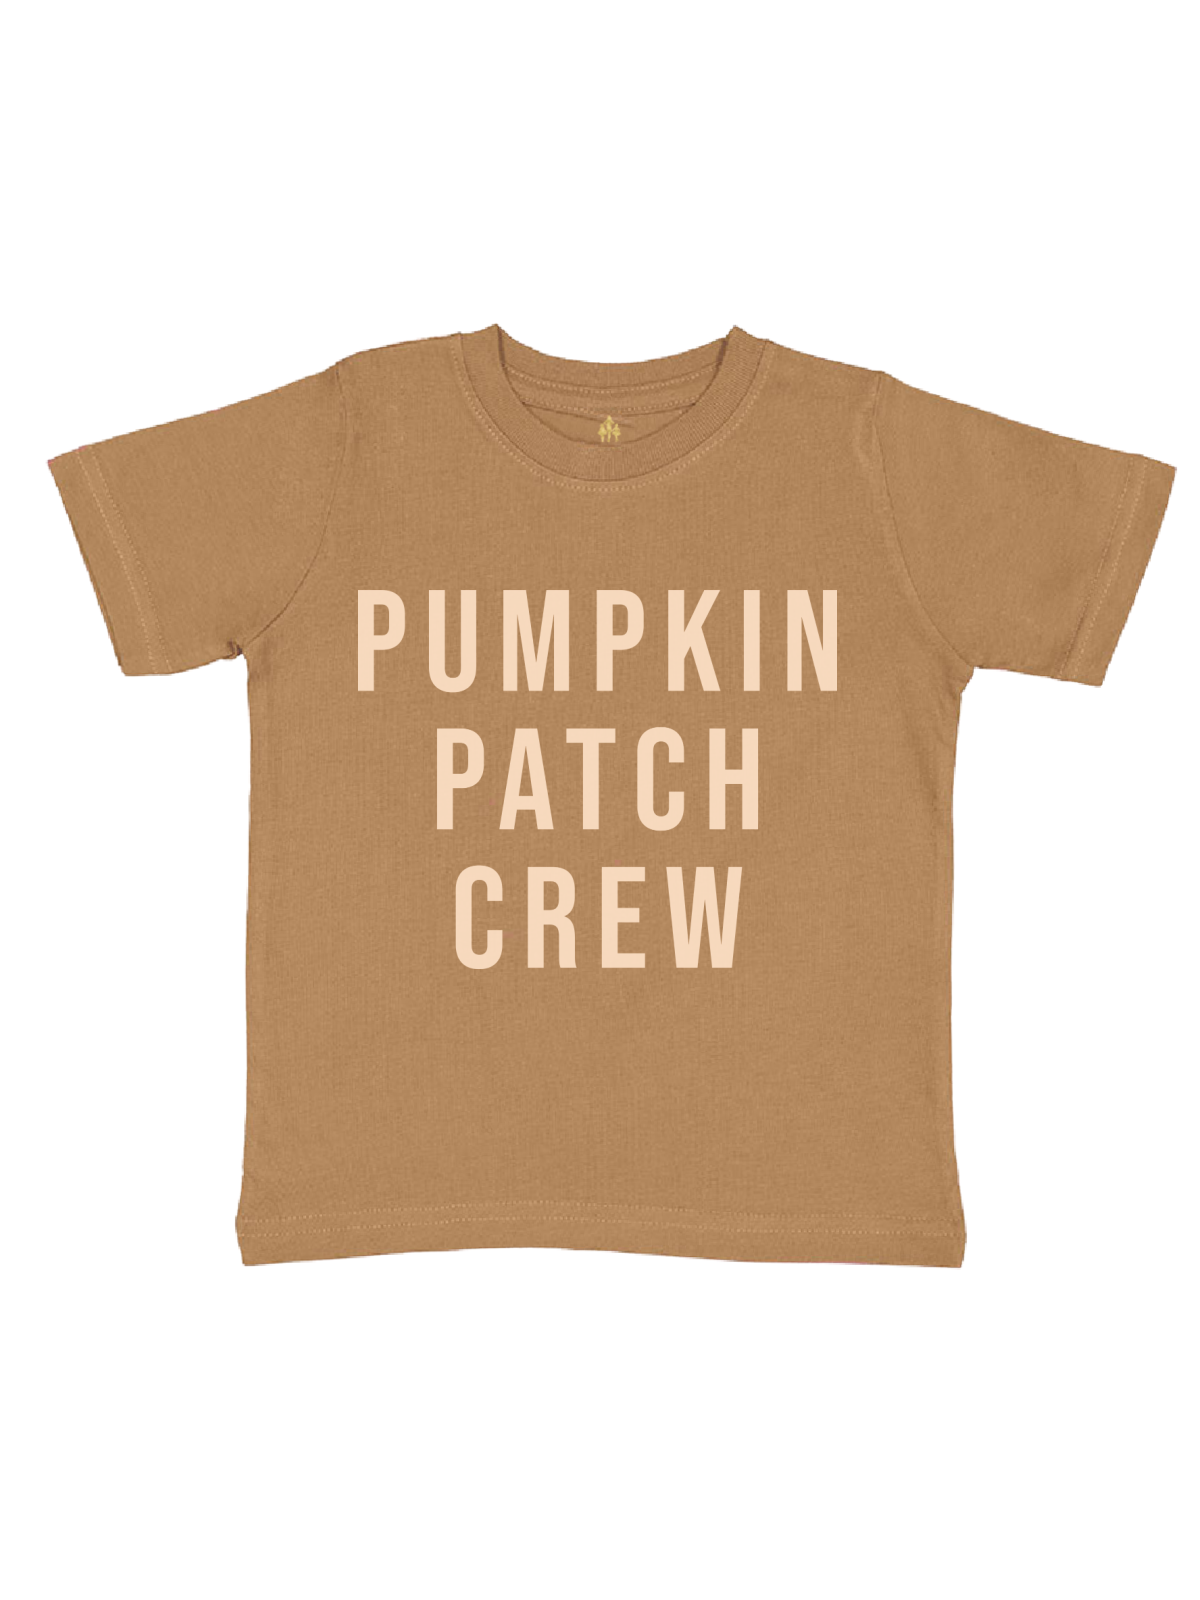 Pumpkin Patch Crew Kids Shirt in Toast